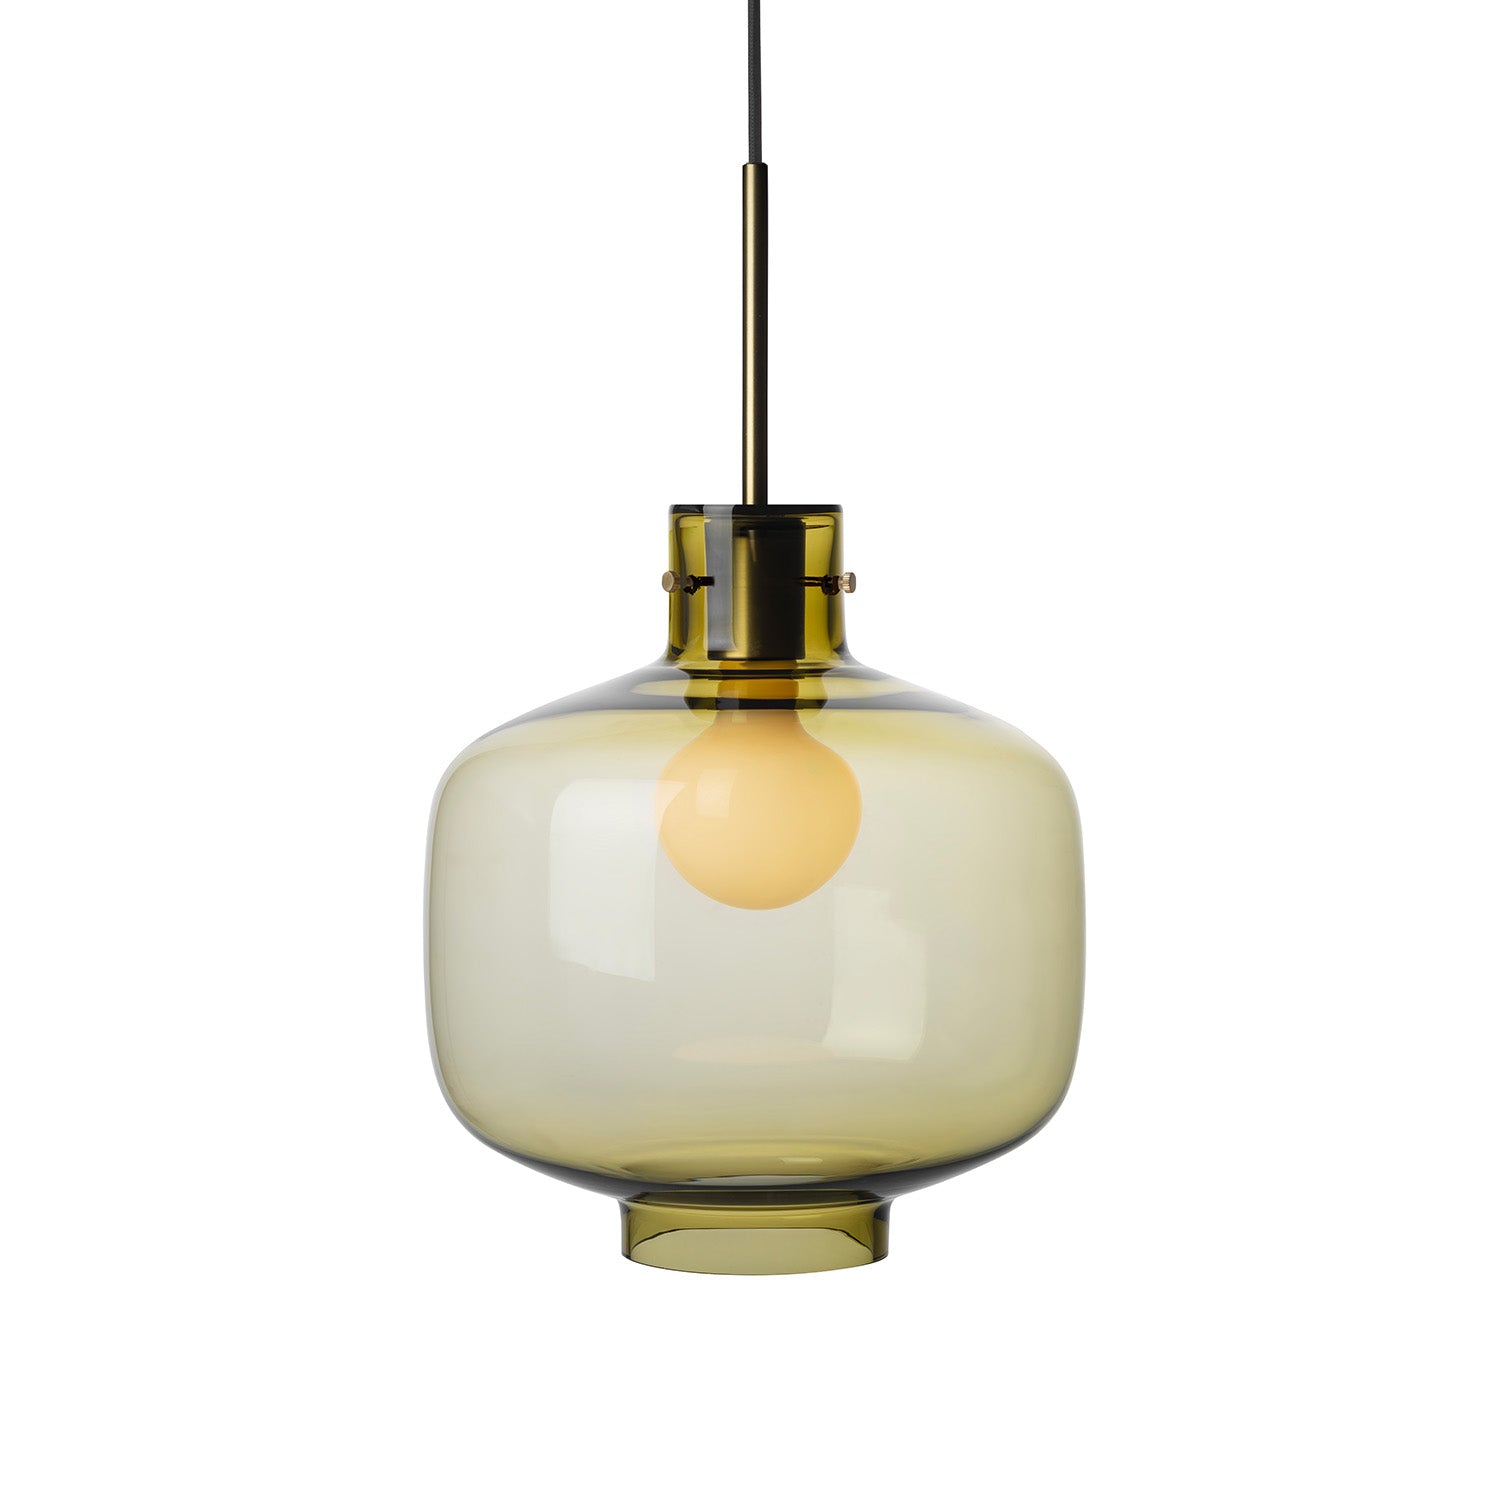 ARCHIVE 4180 - Handmade blown glass pendant lamp